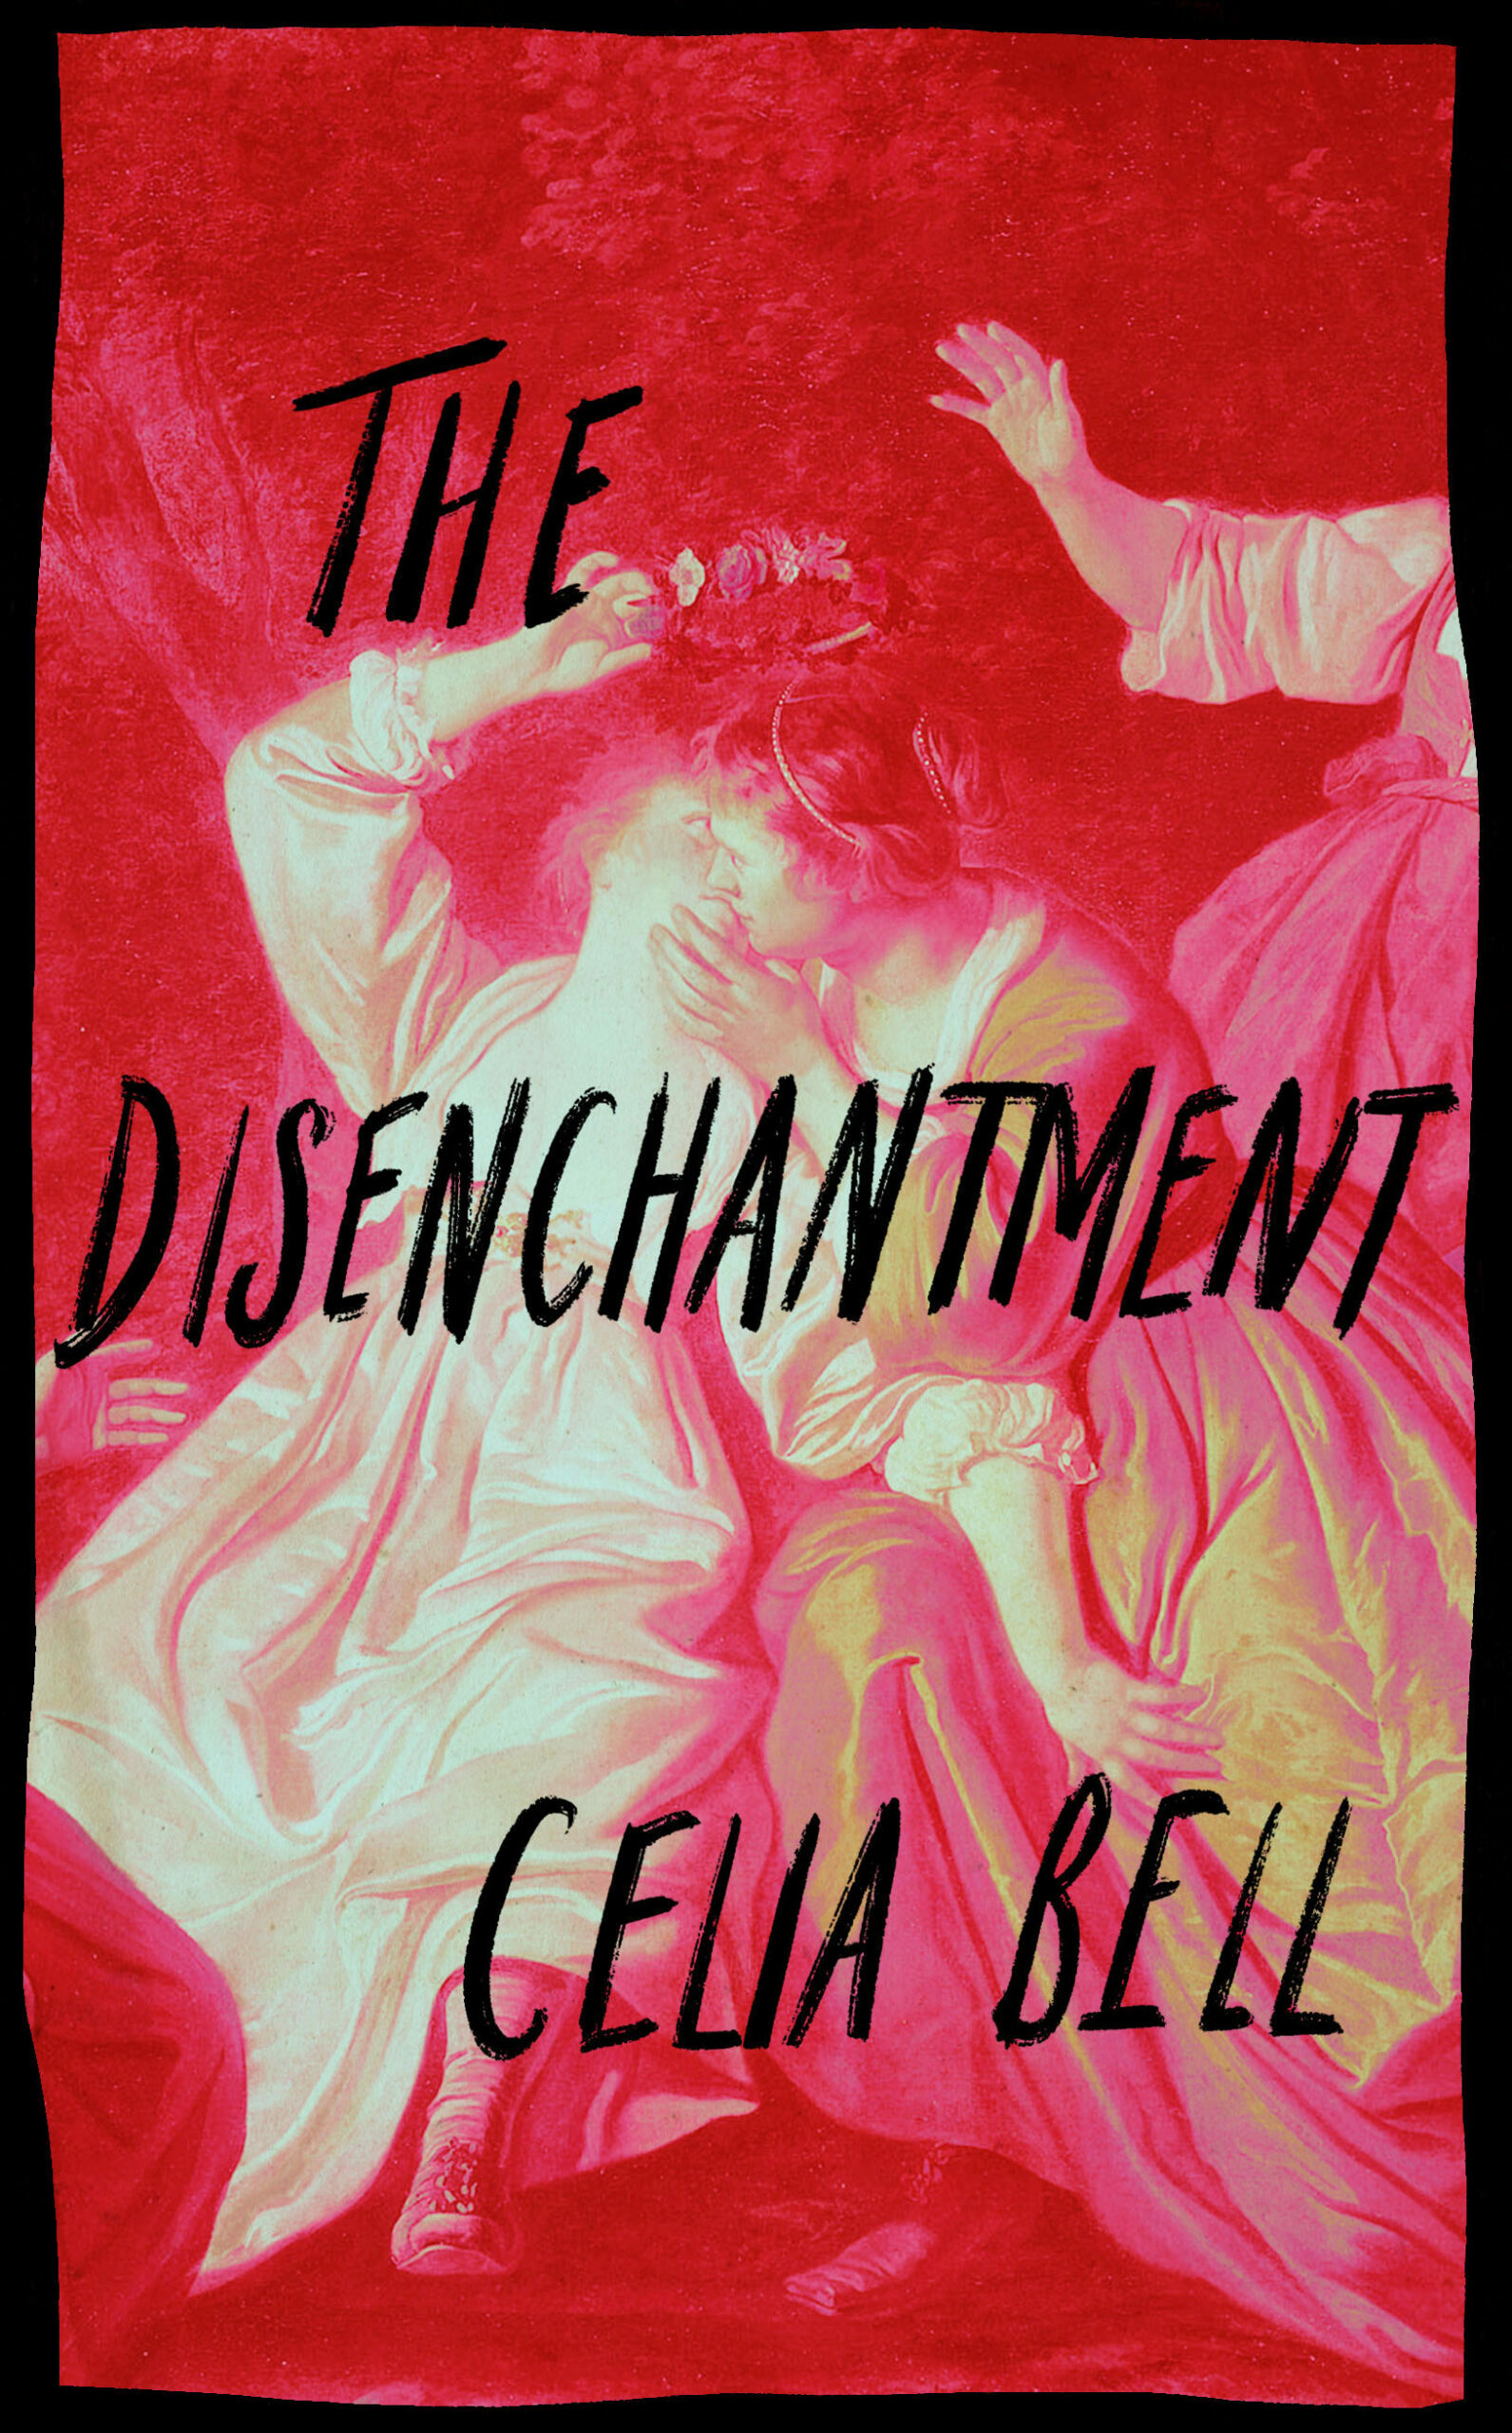 The Disenchantment Celia Bell